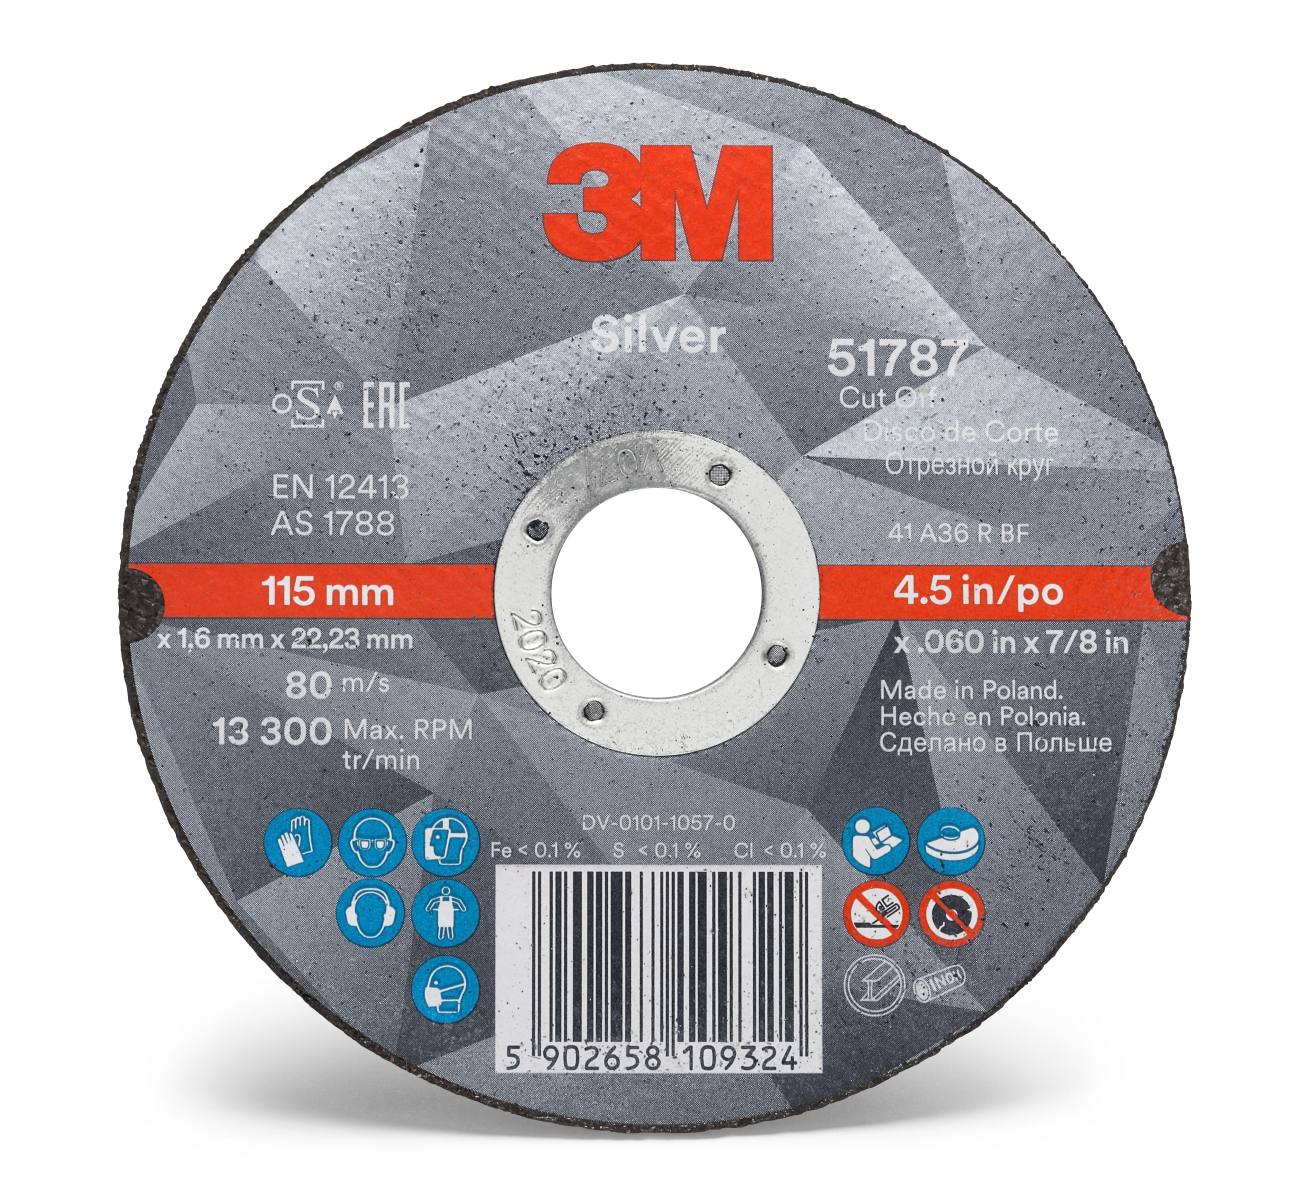 Disco de corte 3M Silver Cut-Off, 125 mm, 2,0 mm, 22,23 mm, T41, 51795